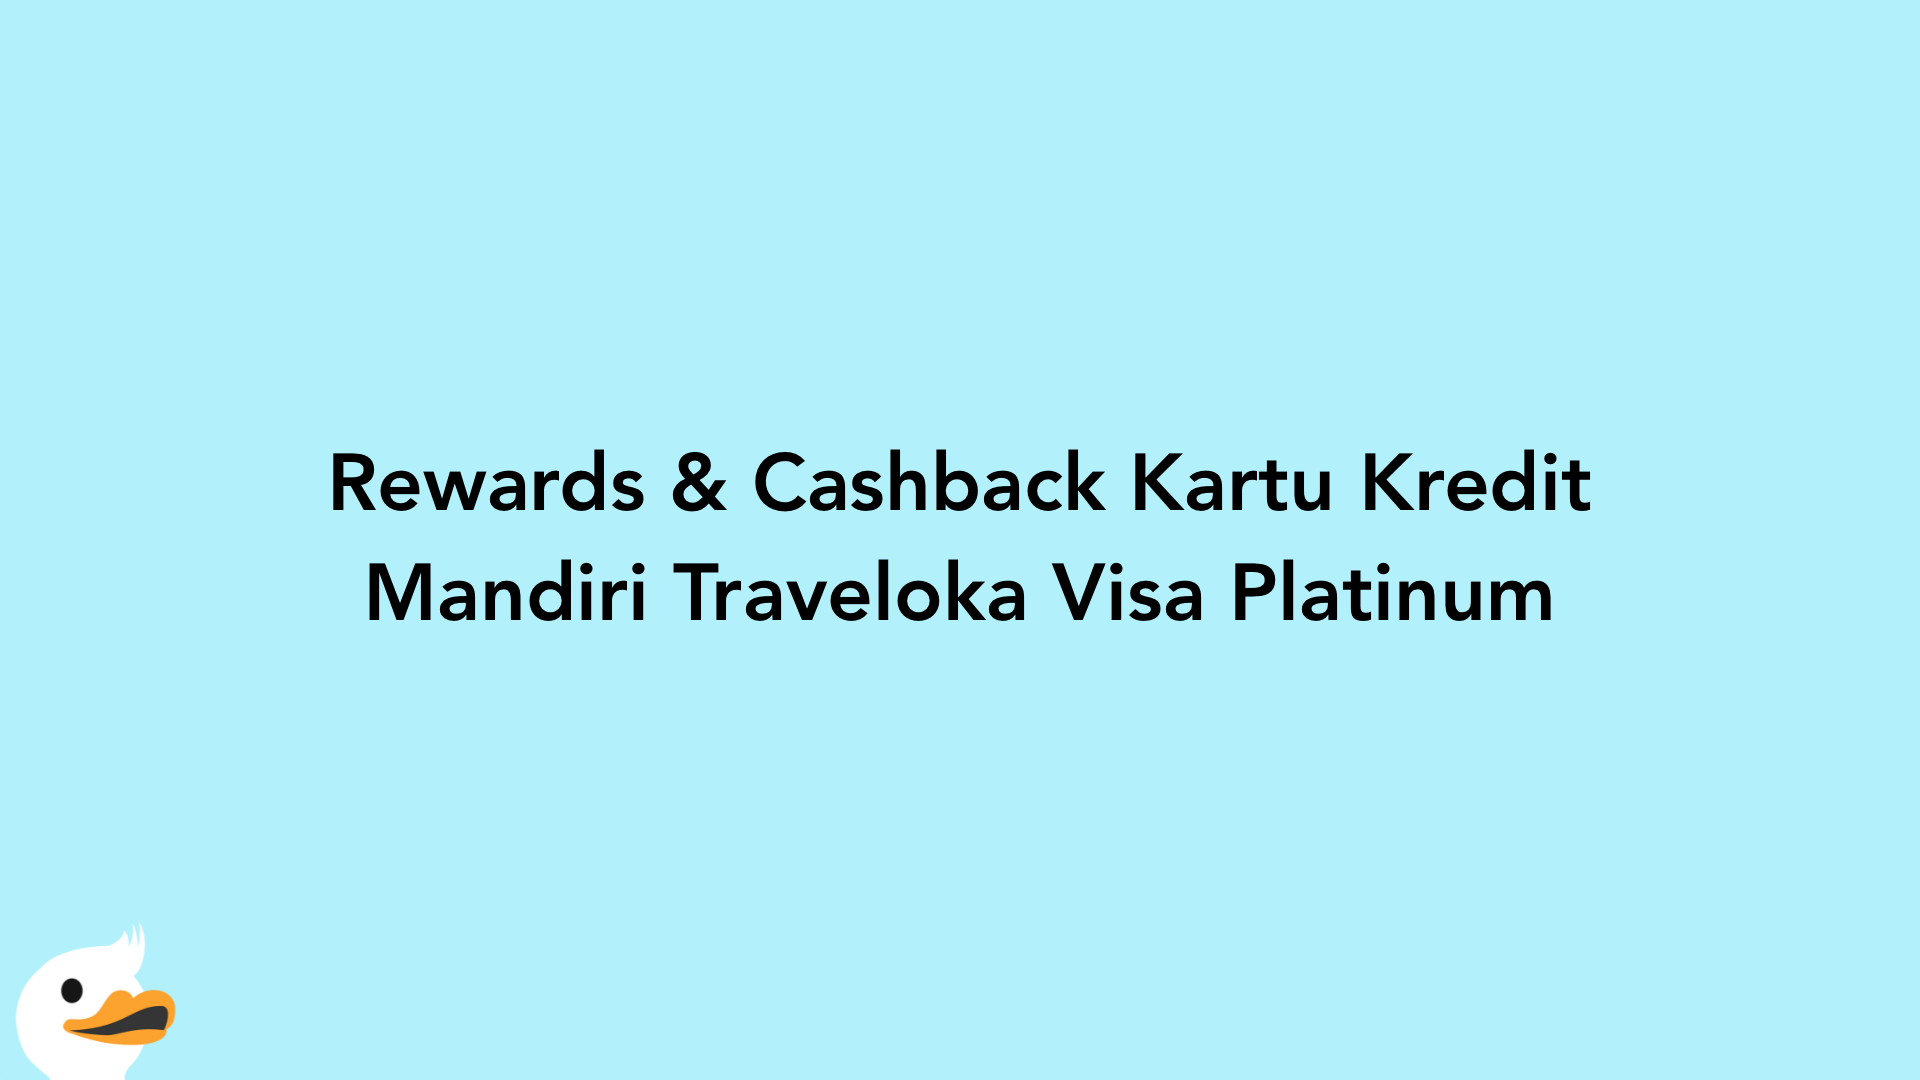 Rewards & Cashback Kartu Kredit Mandiri Traveloka Visa Platinum